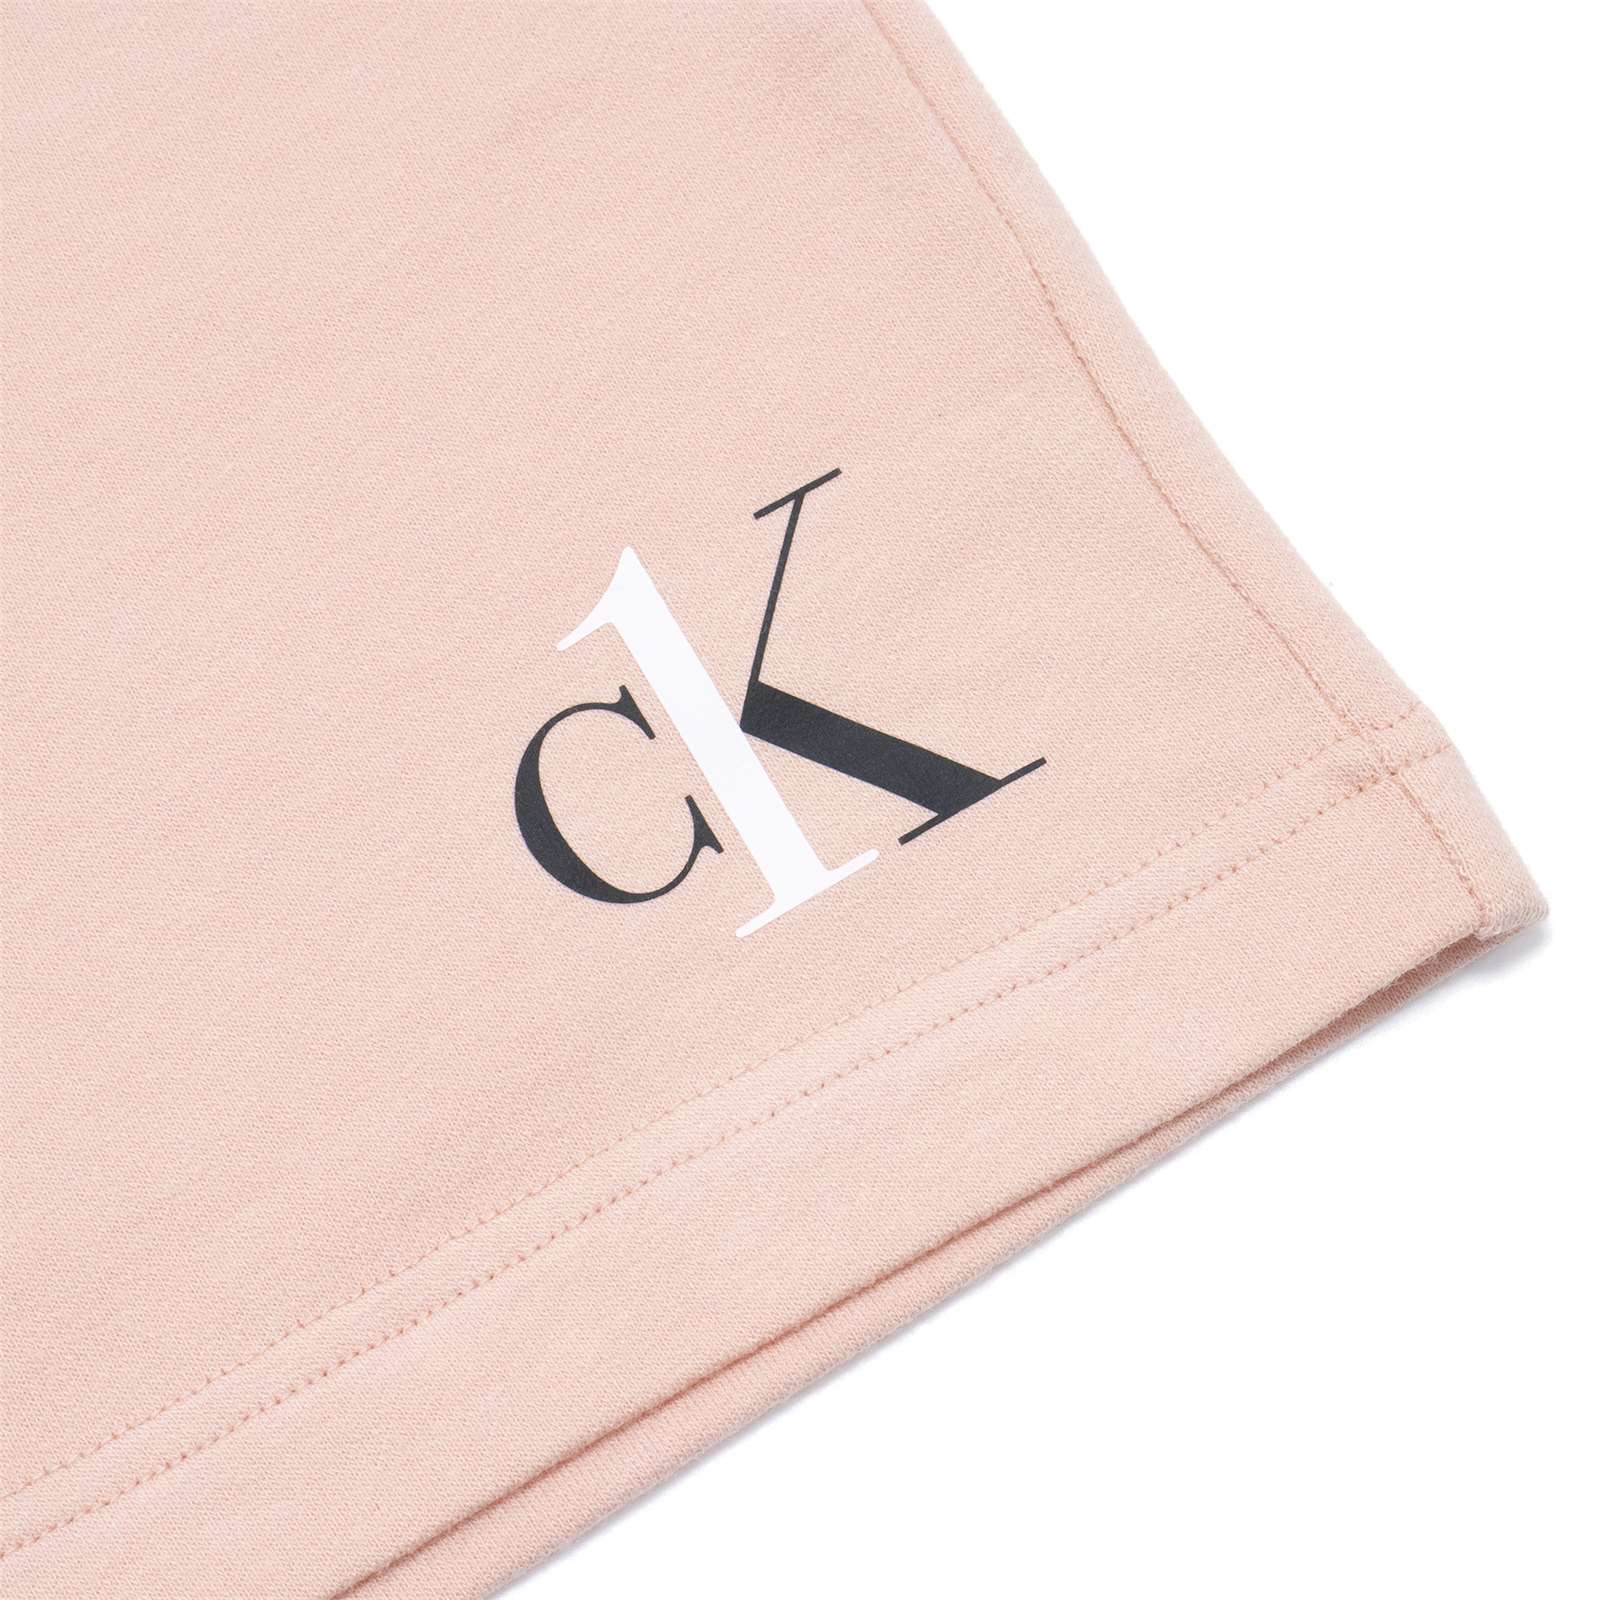 Calvin Klein Women Ck One Lounge Shorts